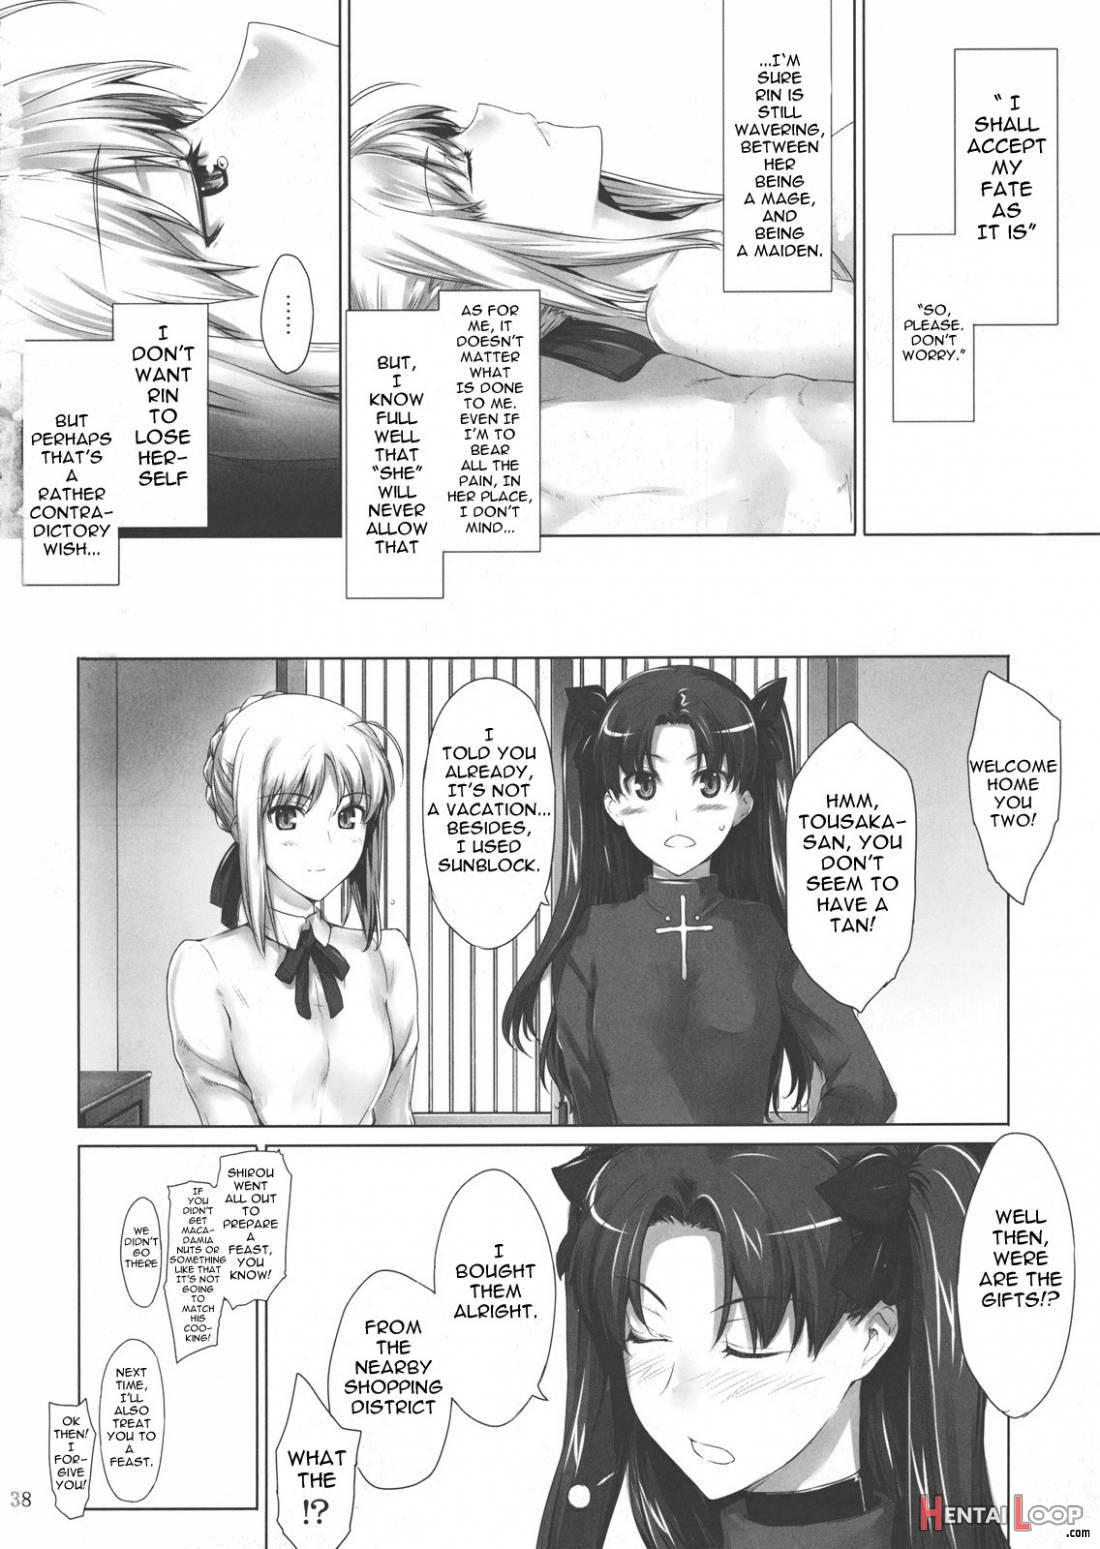 Tohsaka-ke no Kakei Jijou 7 page 37